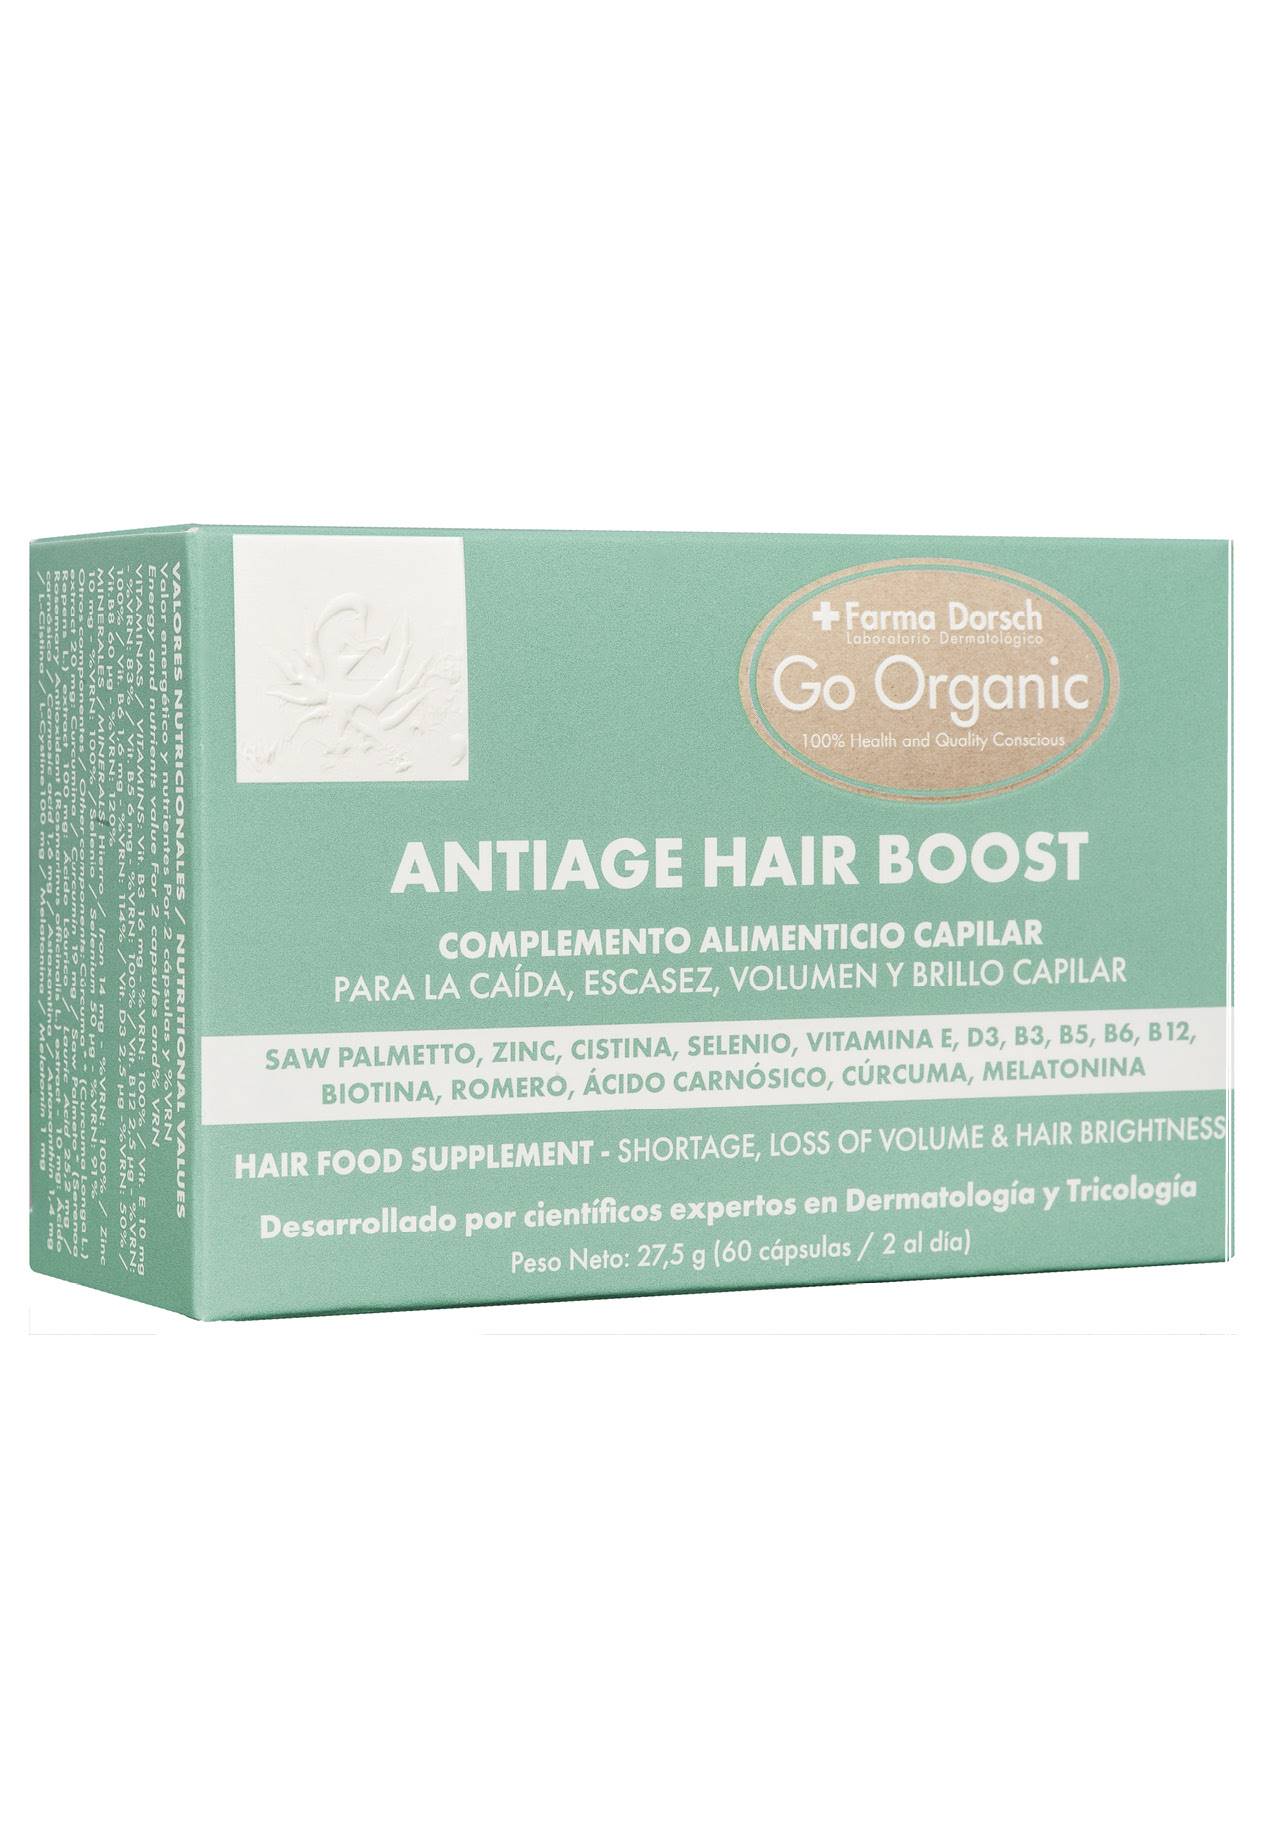 Vitaminas para el pelo: Antiage Hair Boost Go Organic de Farma Dorsch 